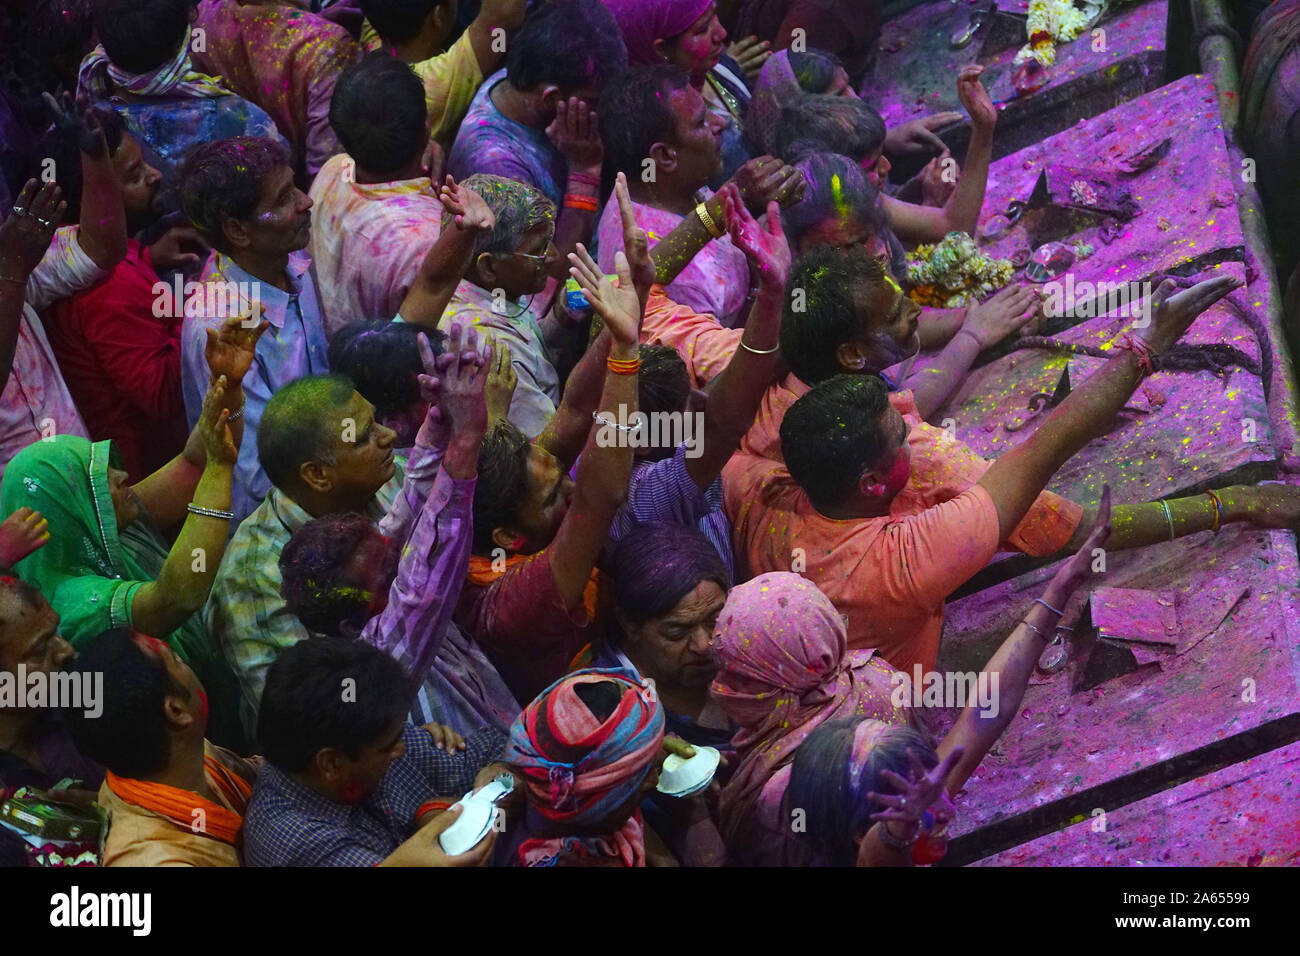 People celebrating Holi festival of colour, Banke Bihari Temple, Uttar Pradesh, India, Asia 